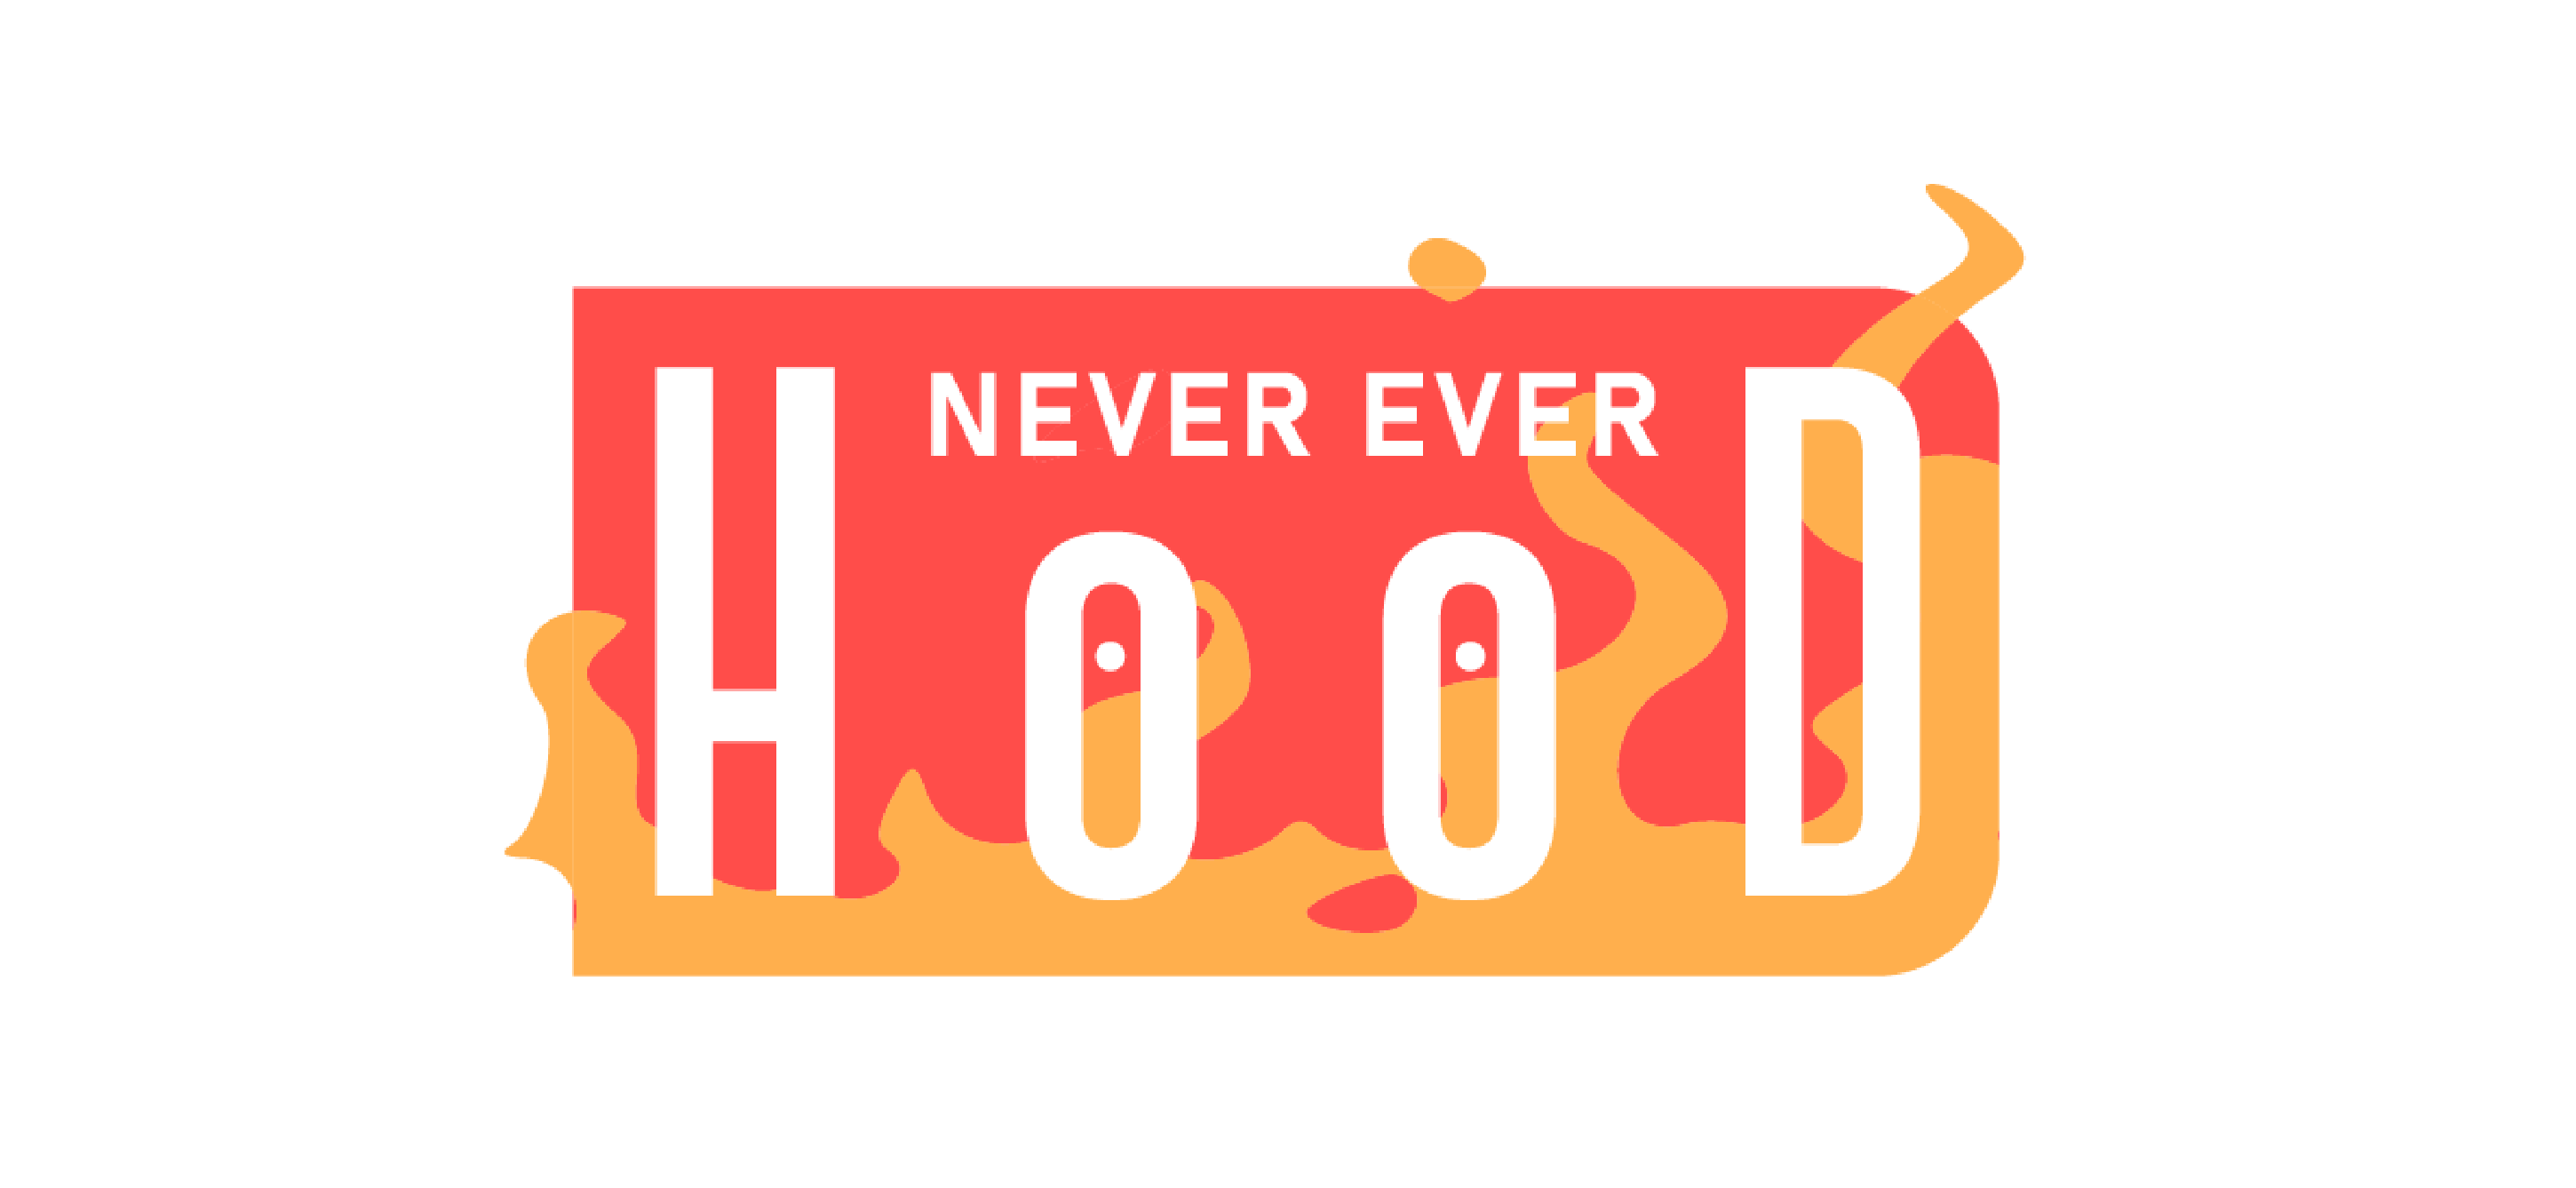 Never Ever Hood